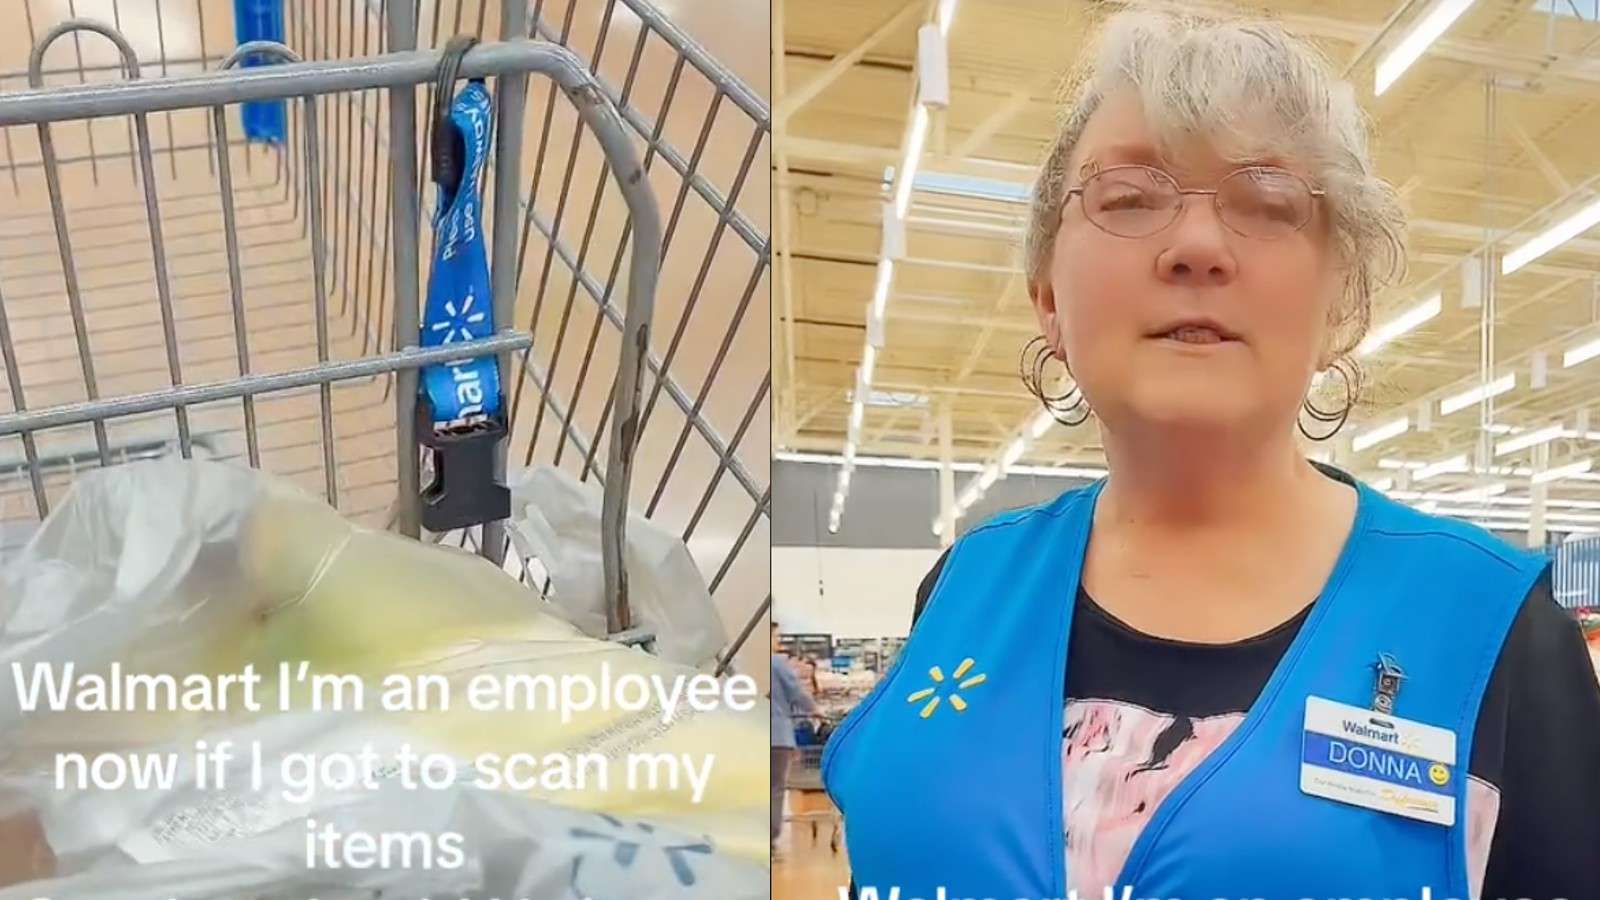 Walmart customer has to bag own items